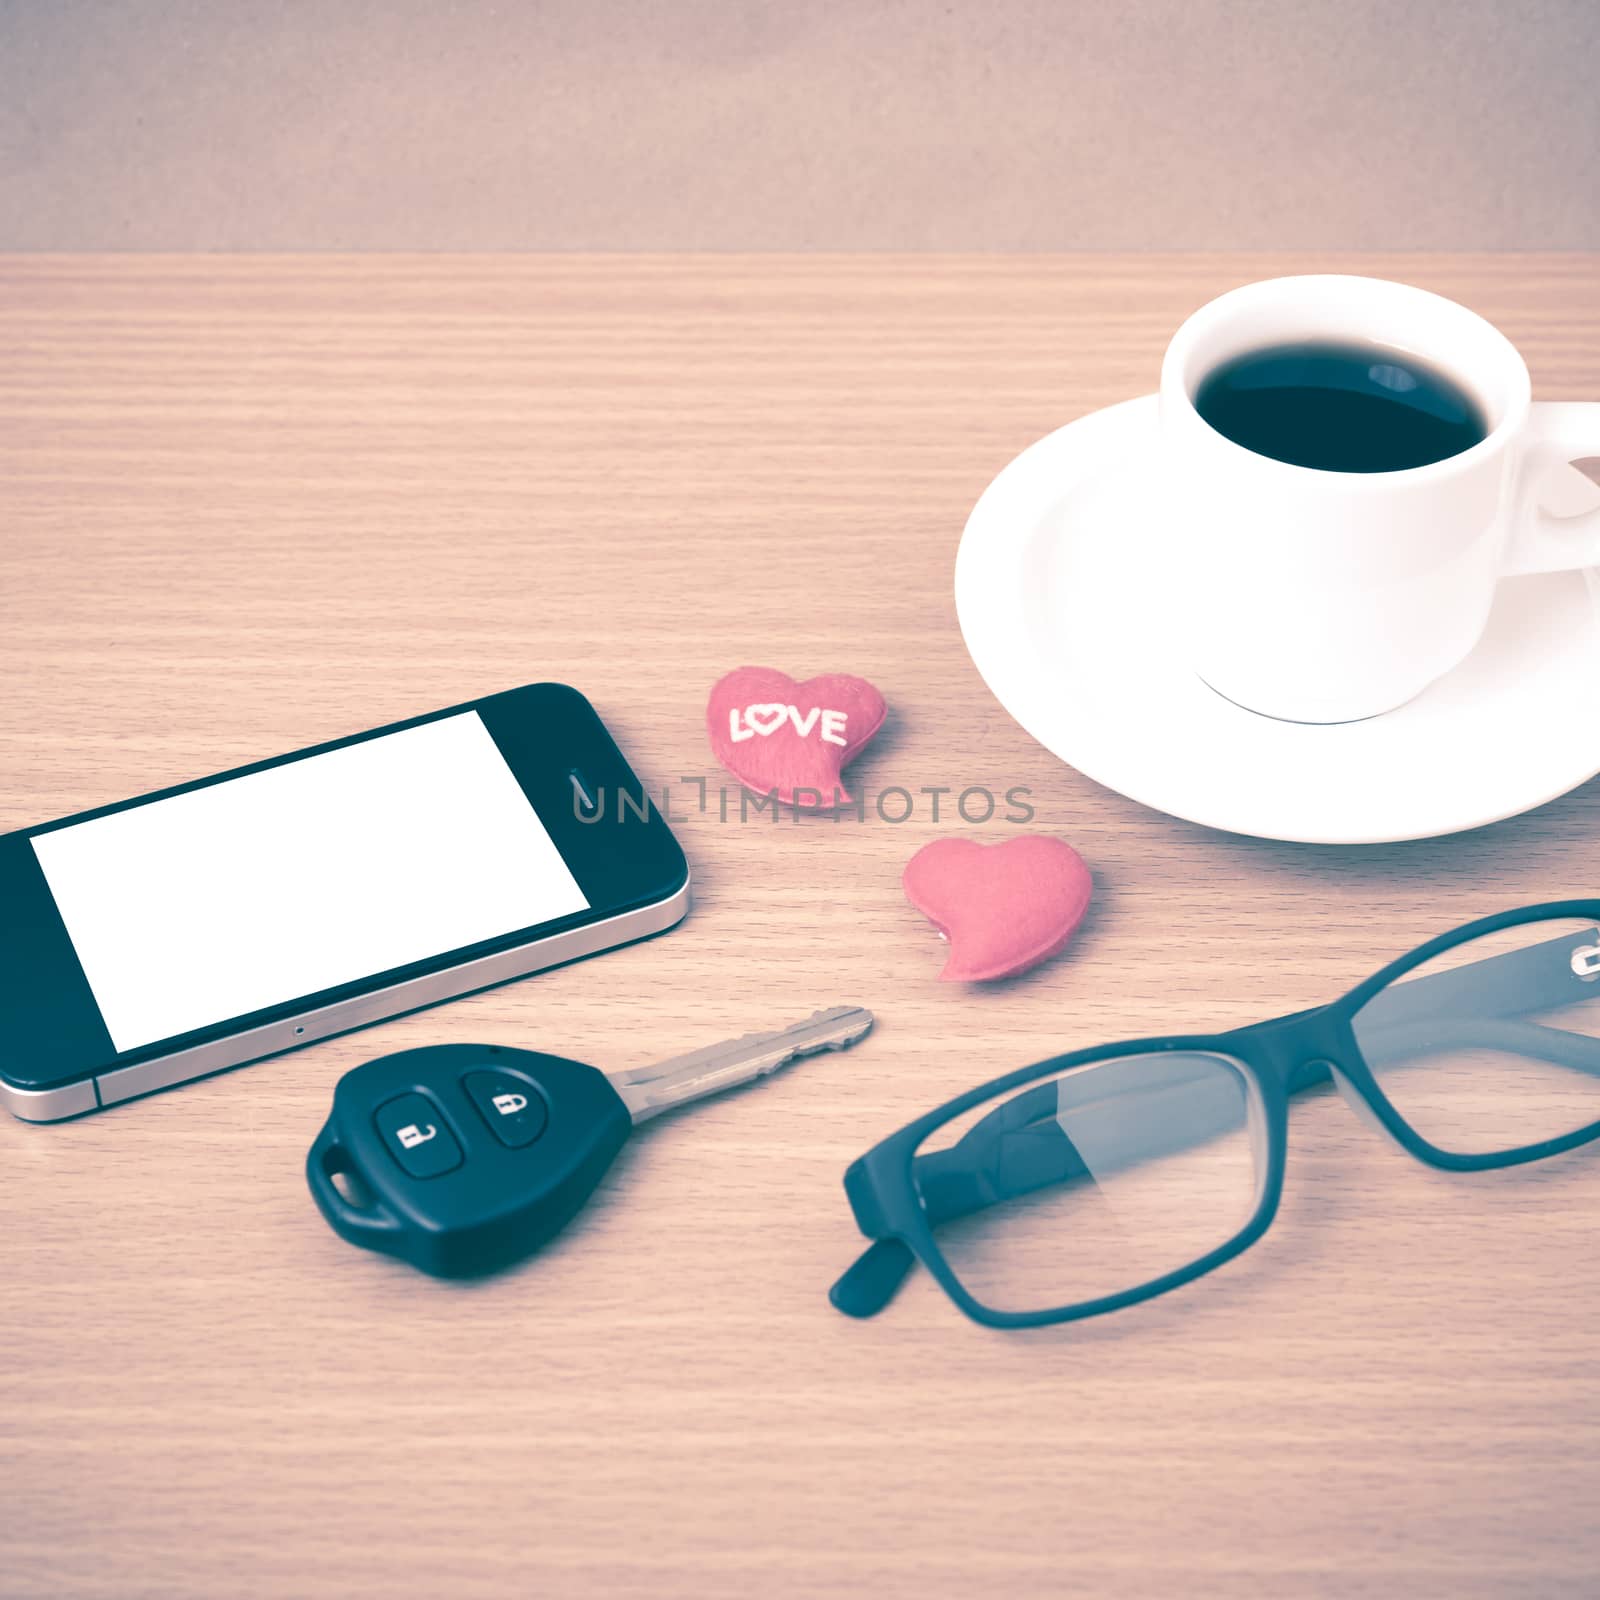 coffee,phone,eyeglasses,car key and heart by ammza12